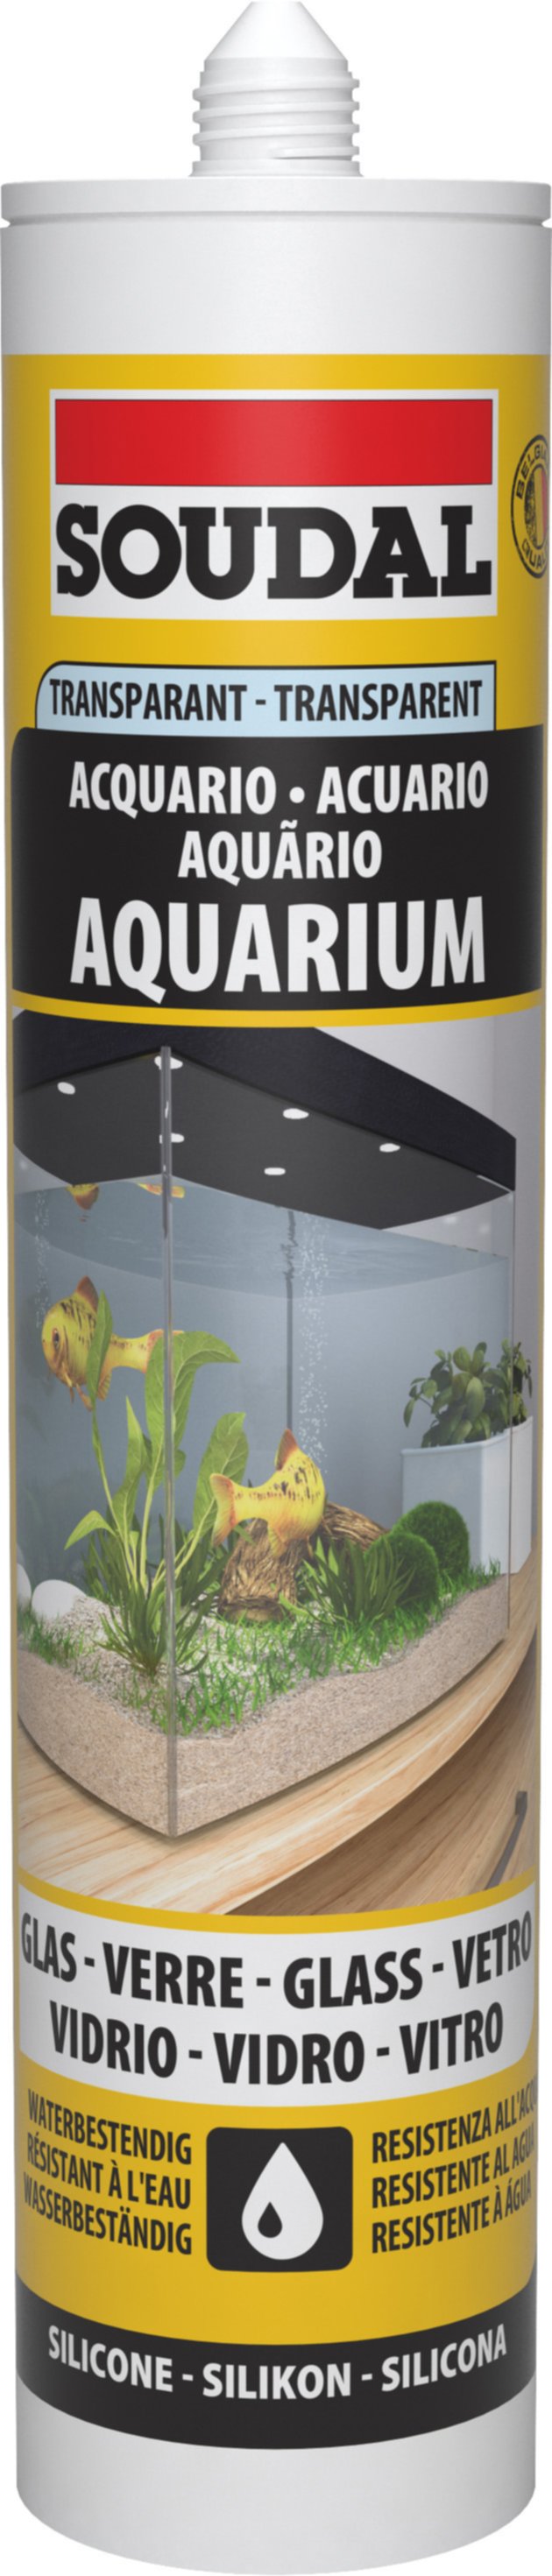 Silicone pour aquarium transparent, 300ml - SOUDAL